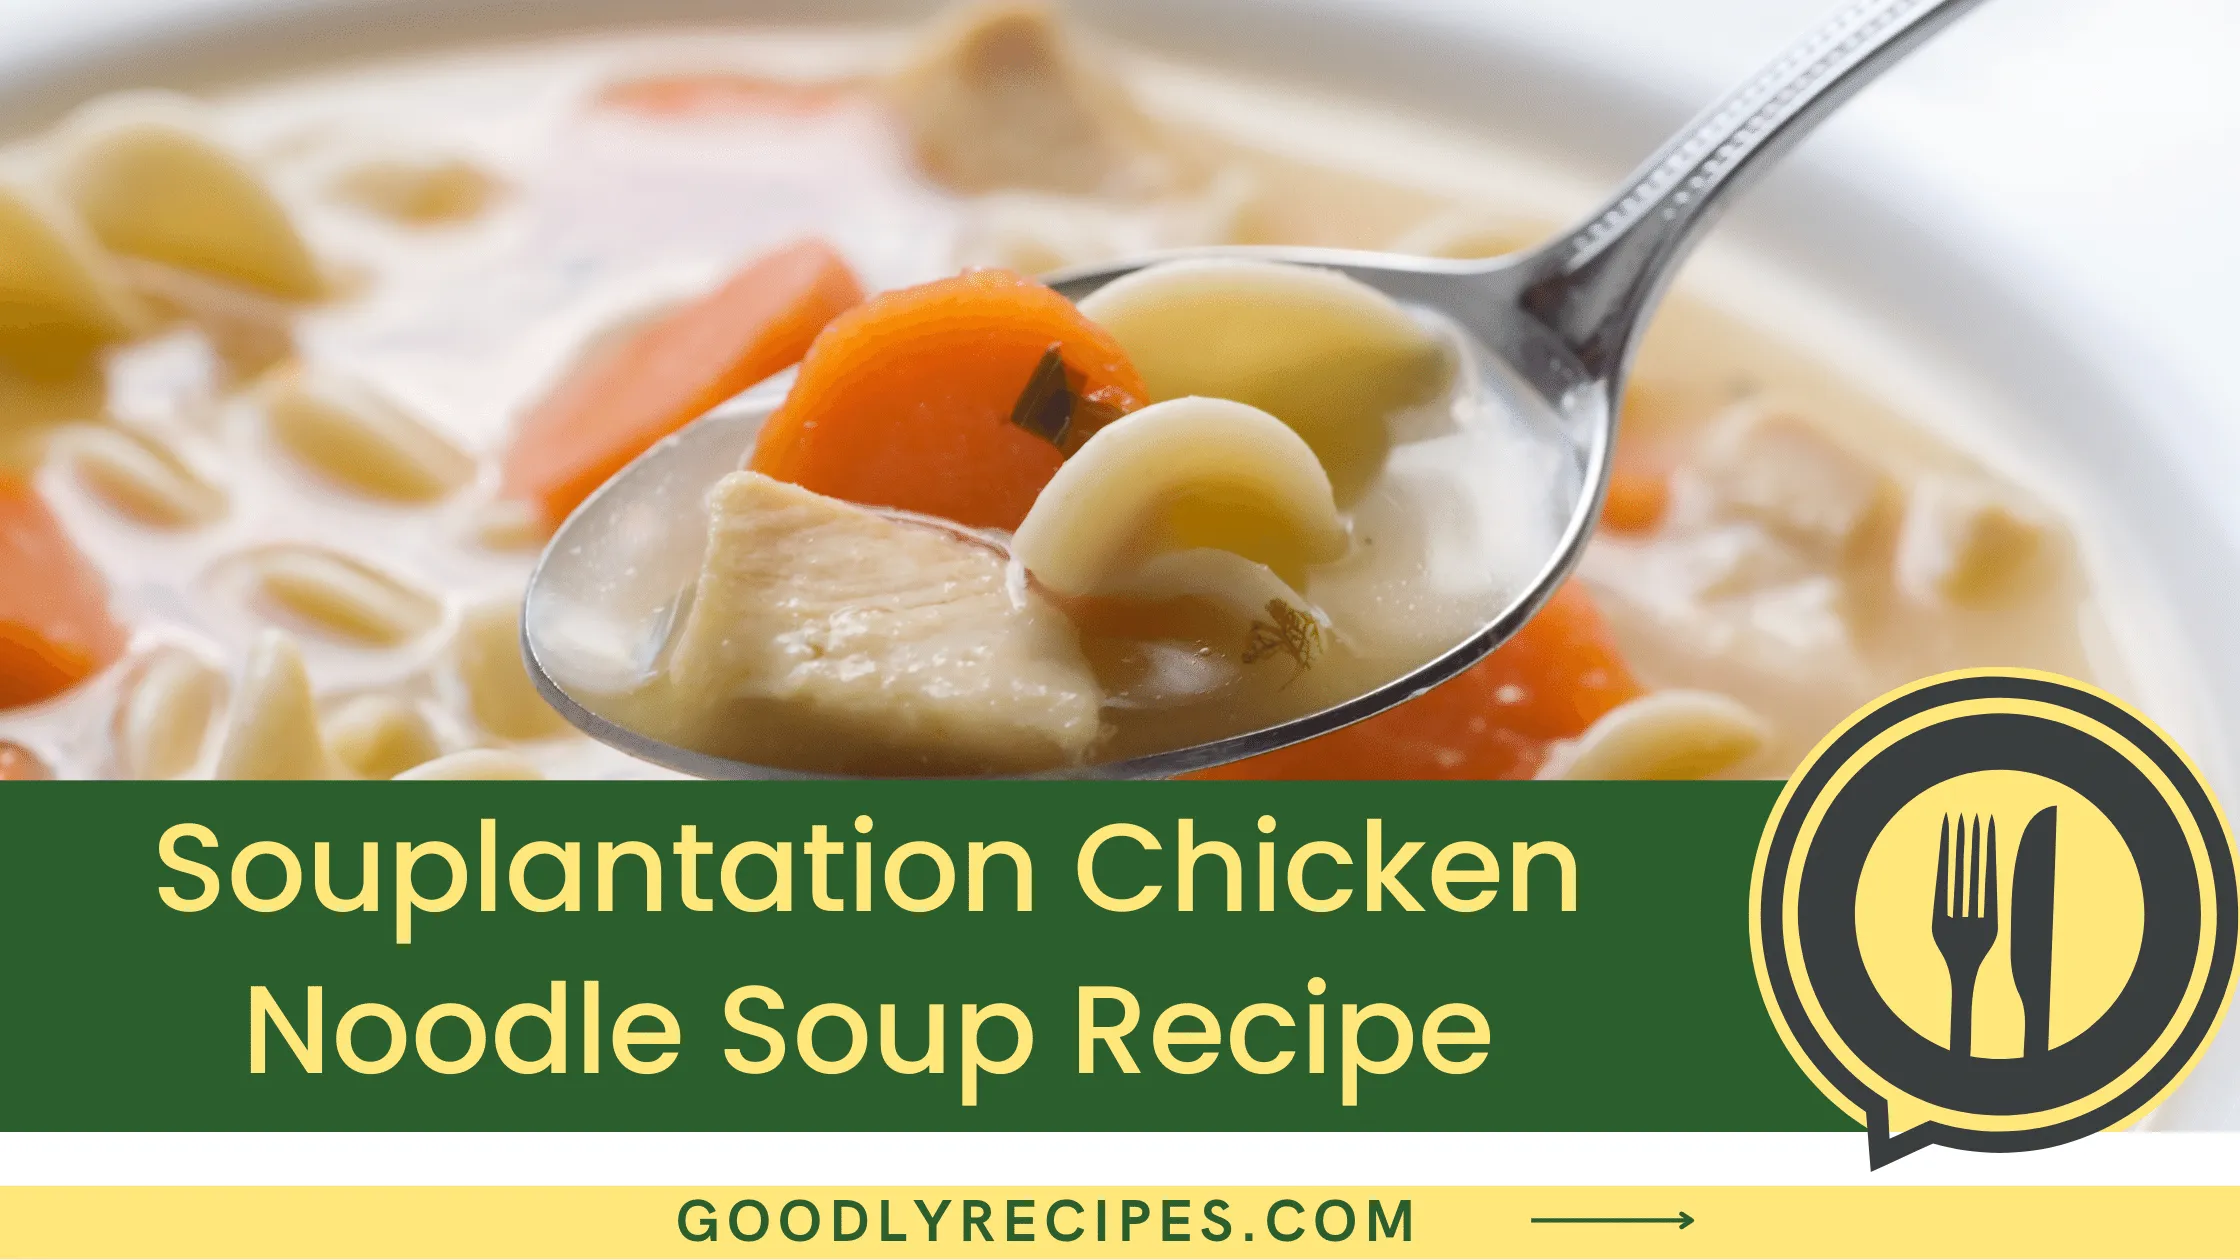 What is Souplantation Chicken Noodle Soup?